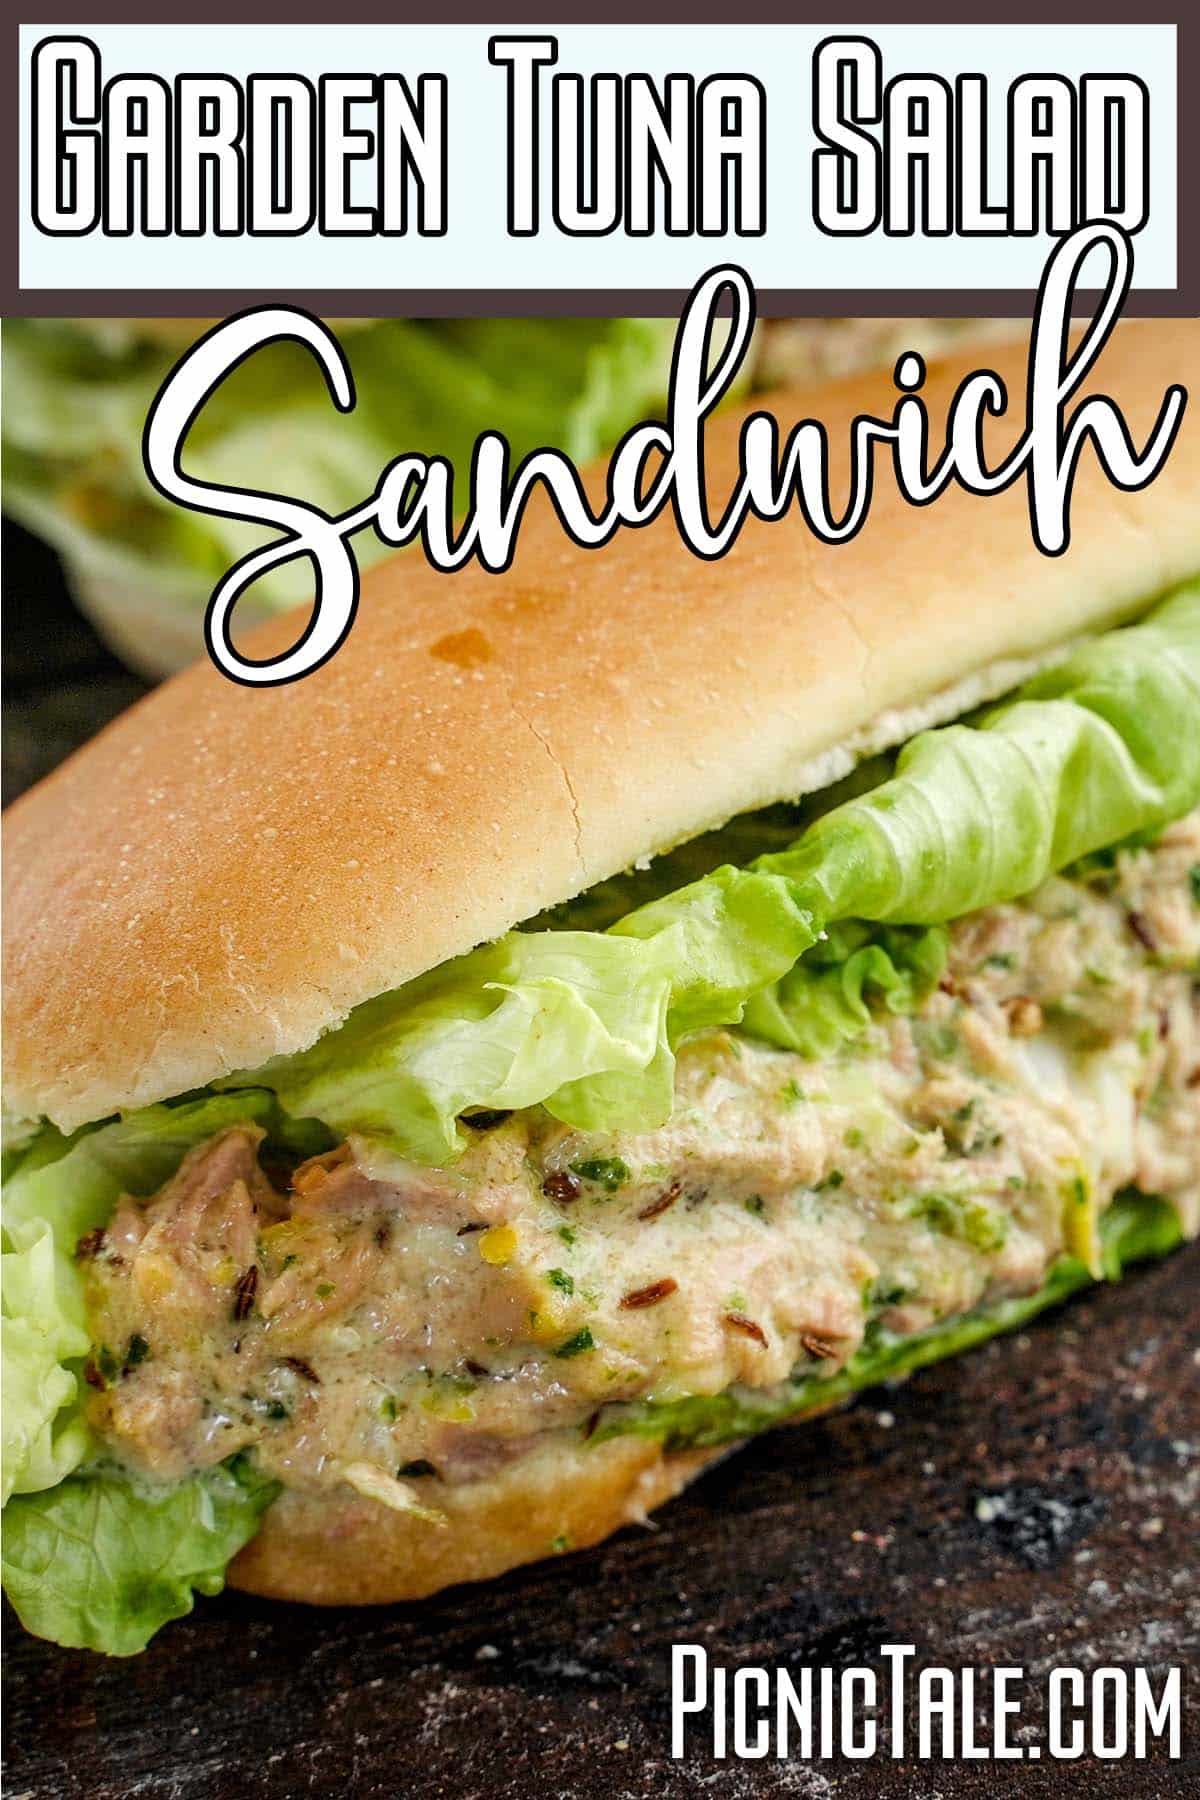 Garden tuna salad sandwich, wording on top.